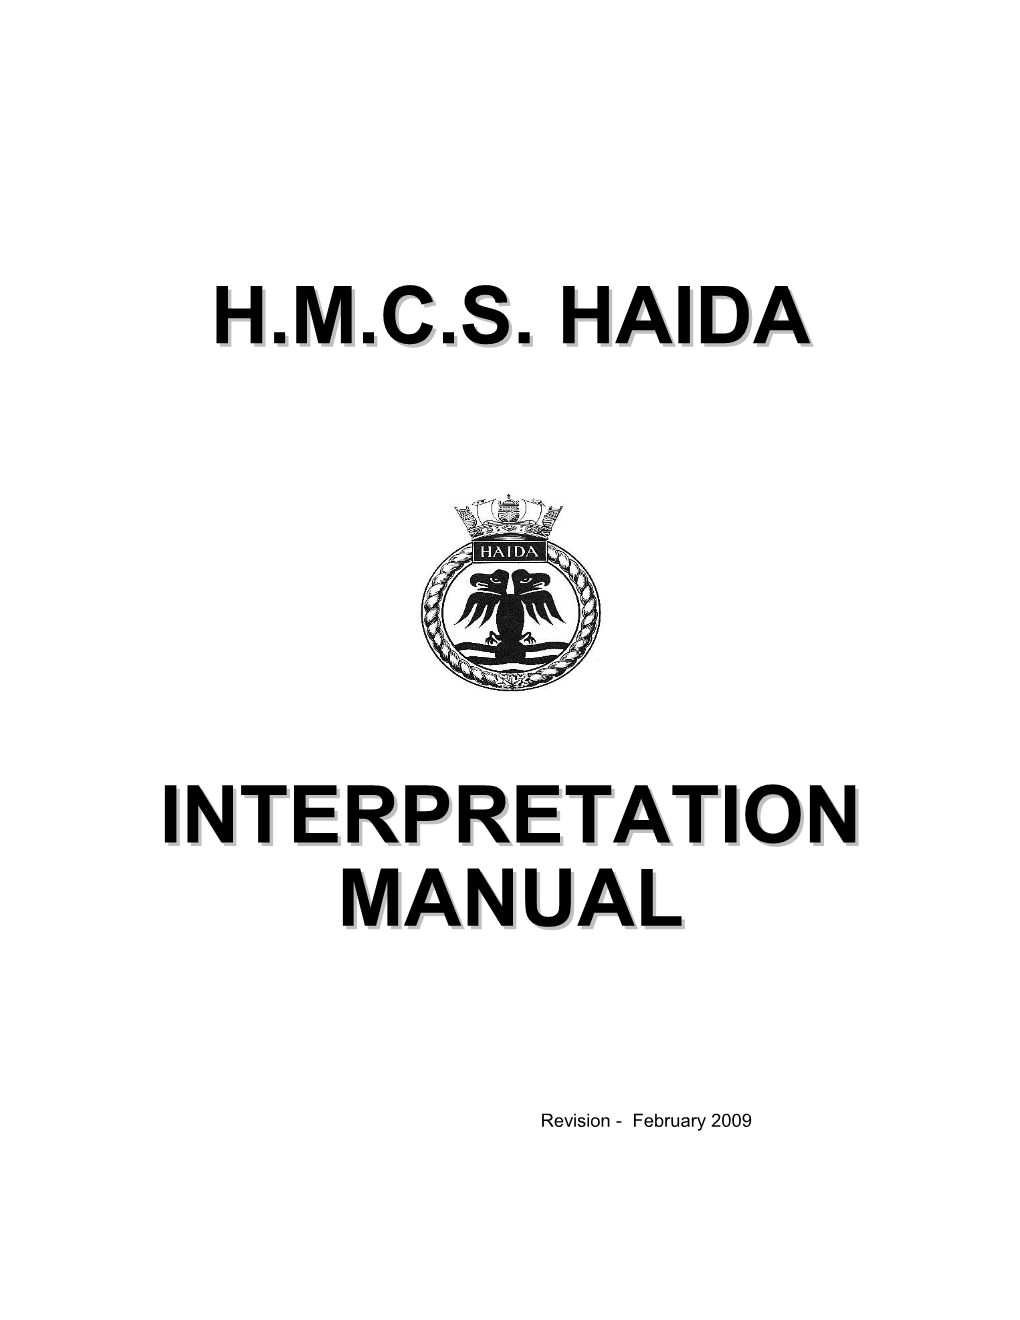 Interpretation Manual